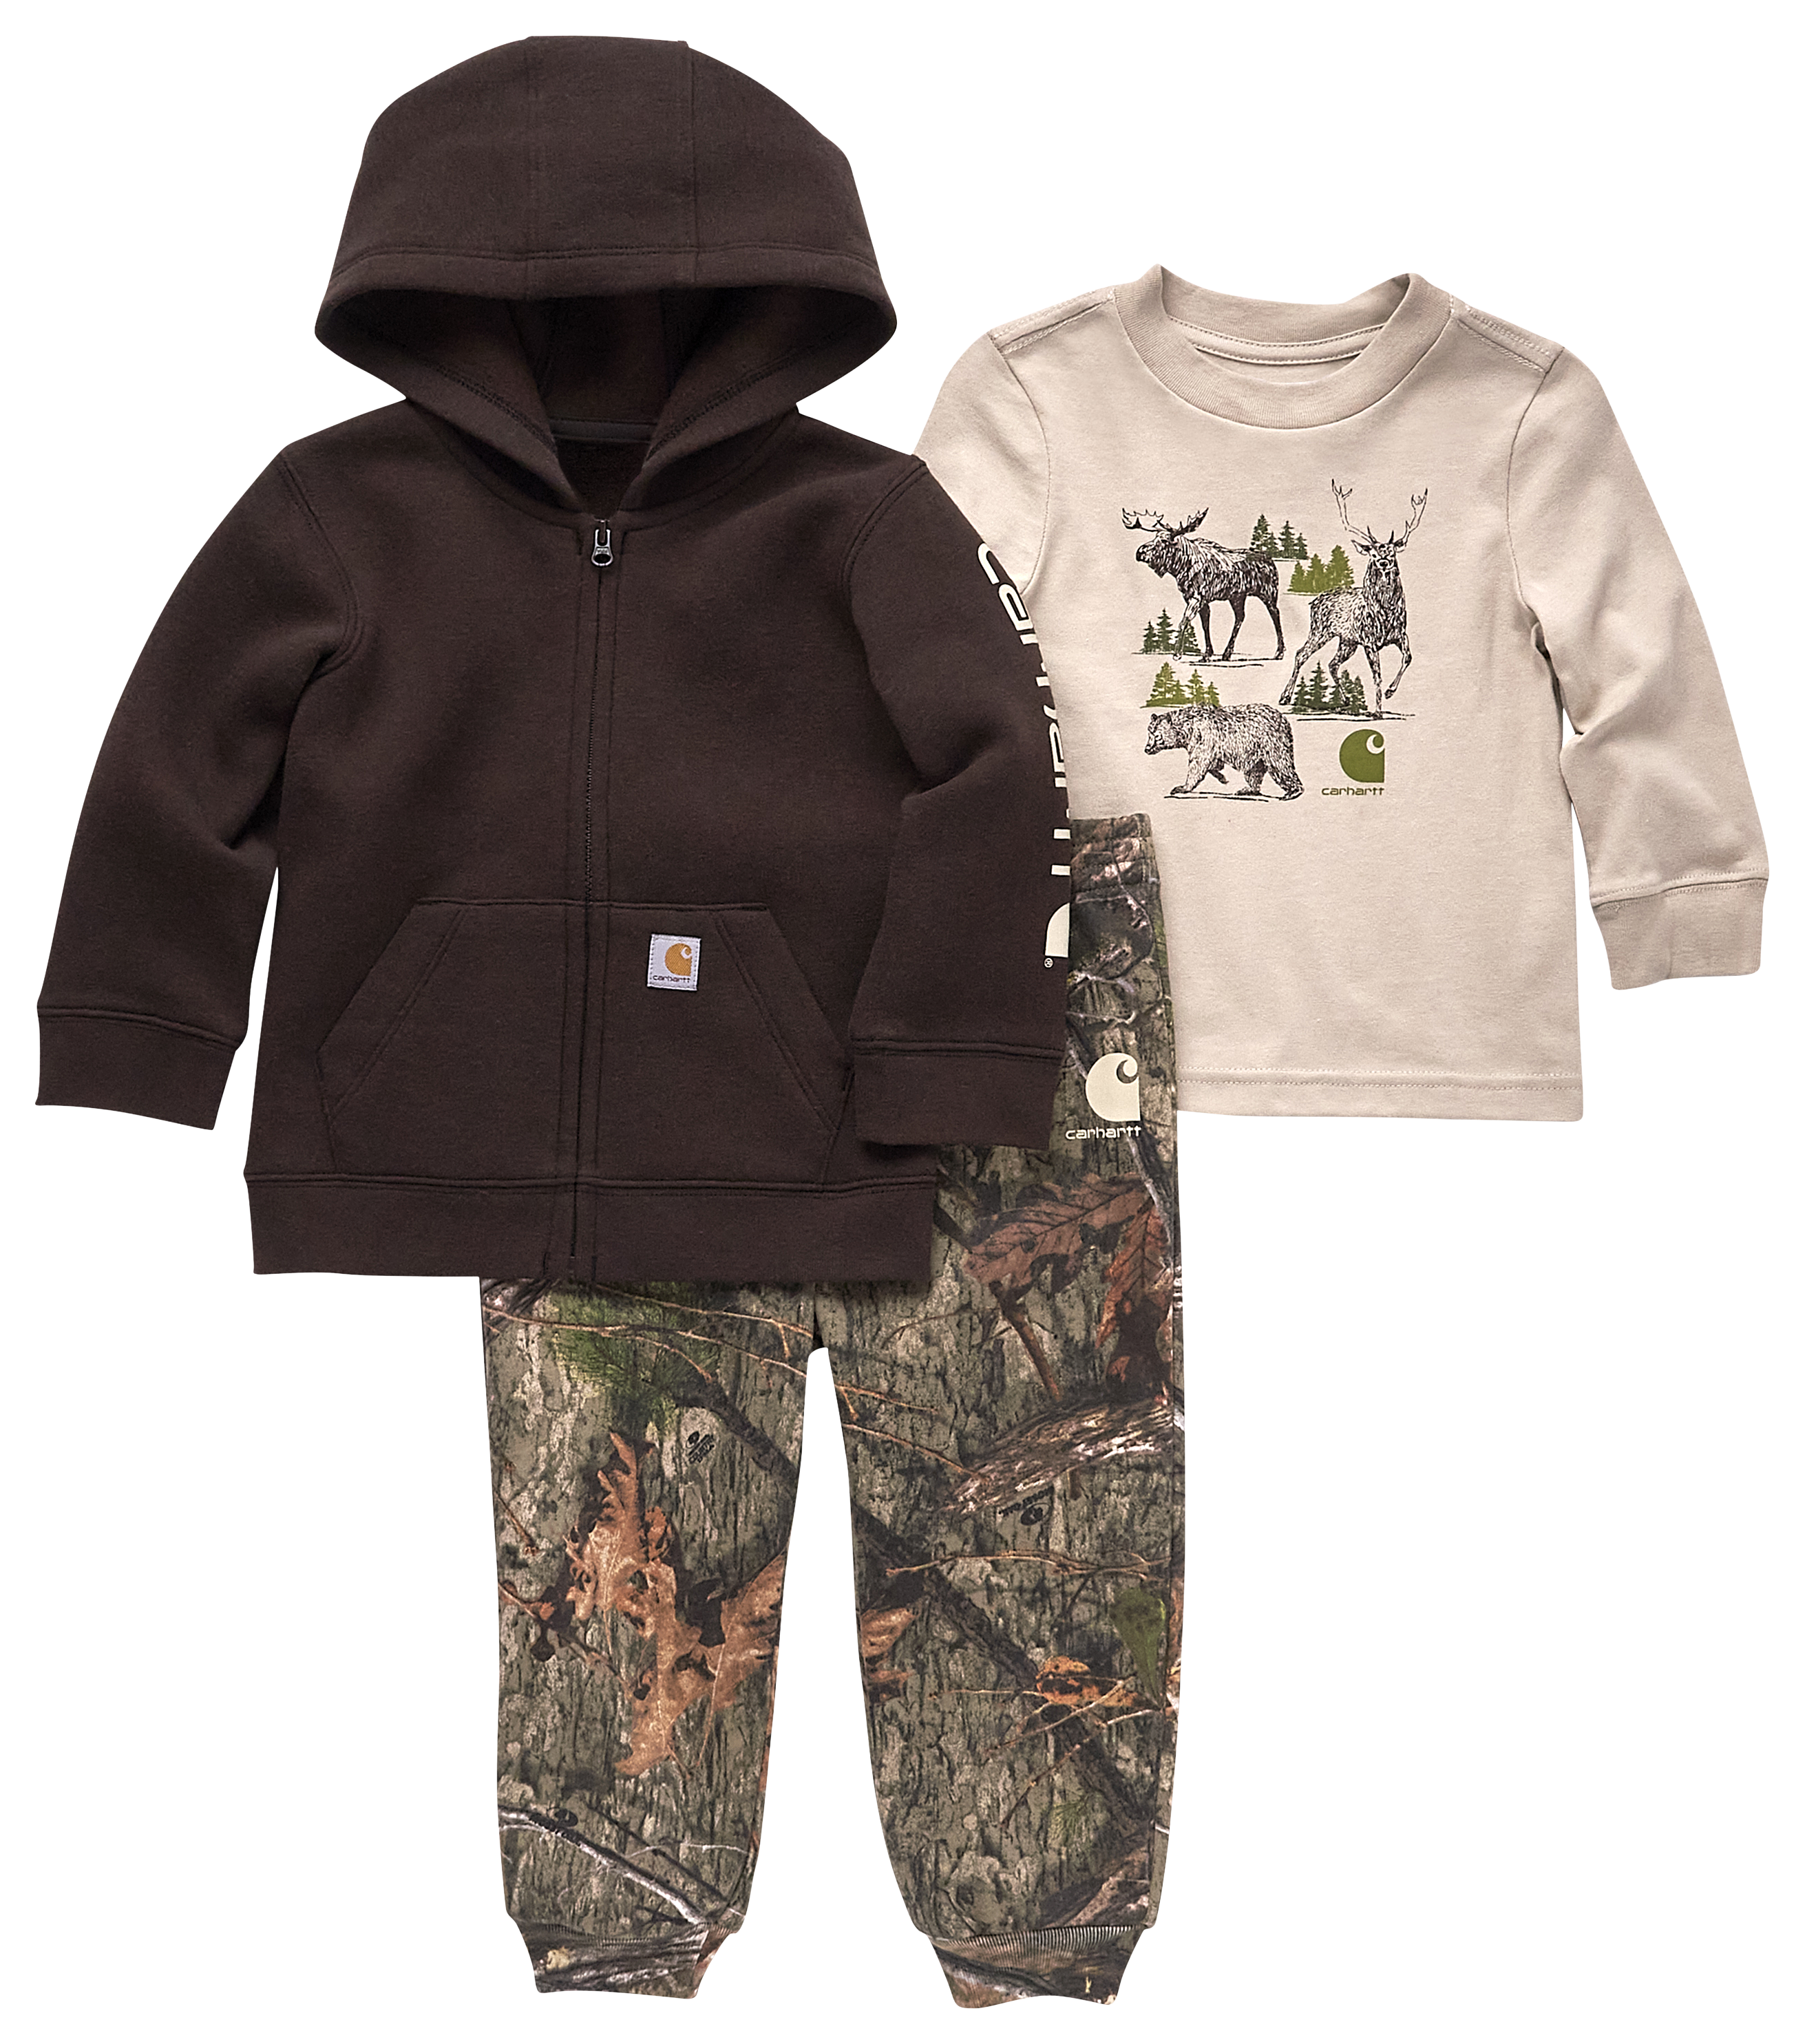 Carhartt Long-Sleeve T-Shirt, Jacket, and Fleece Pants 3-Piece Set for Babies - Mossy Oak Country DNA - 6 Months